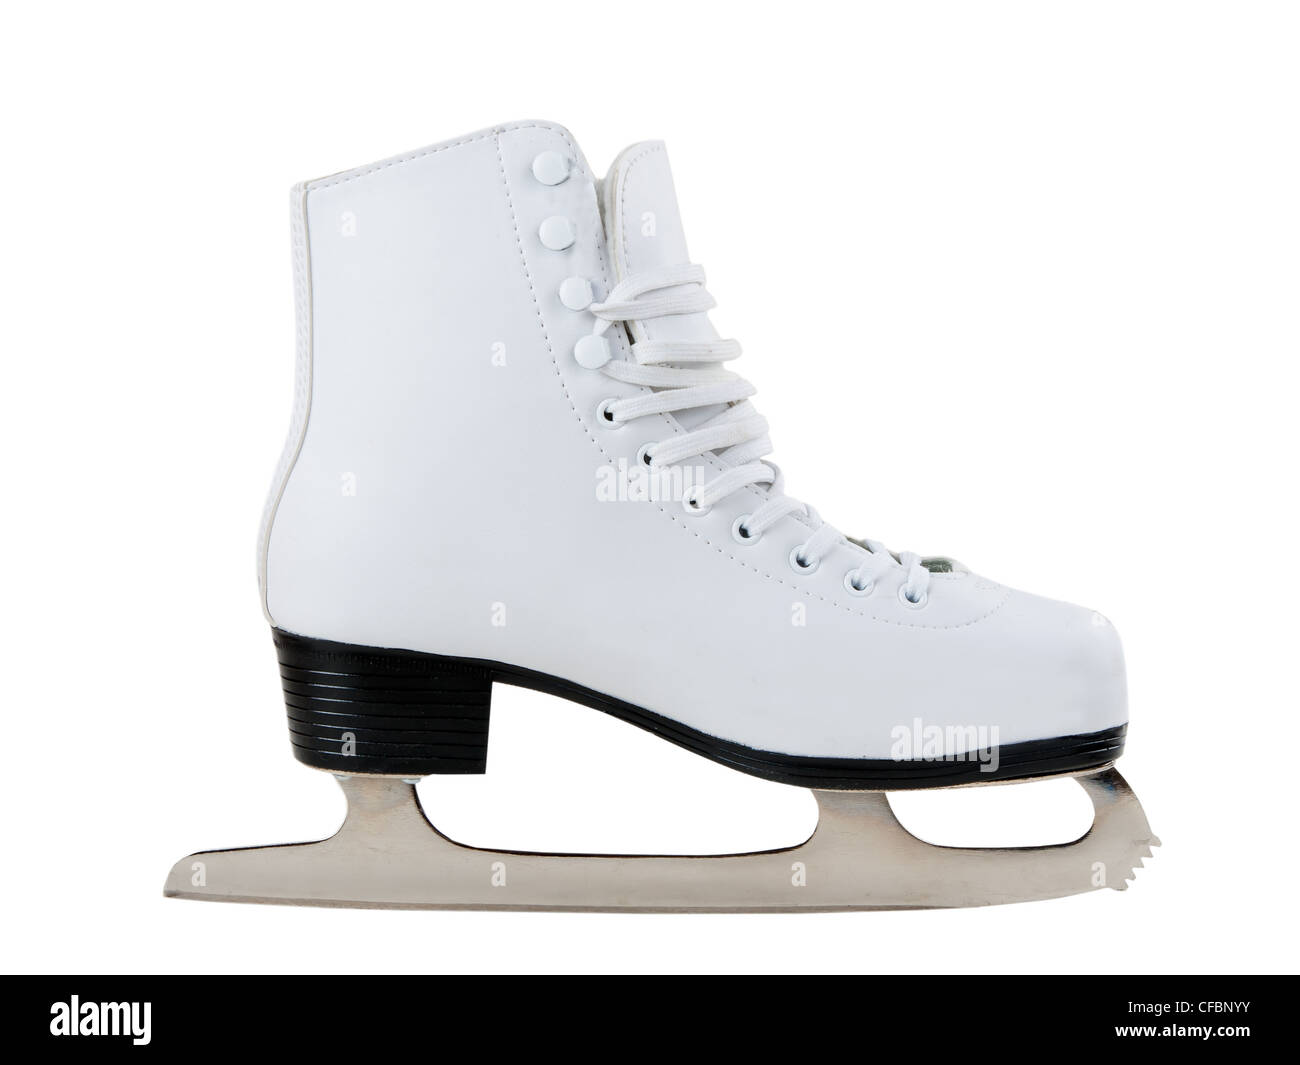 White skates for figure skating on ice Stock Photo